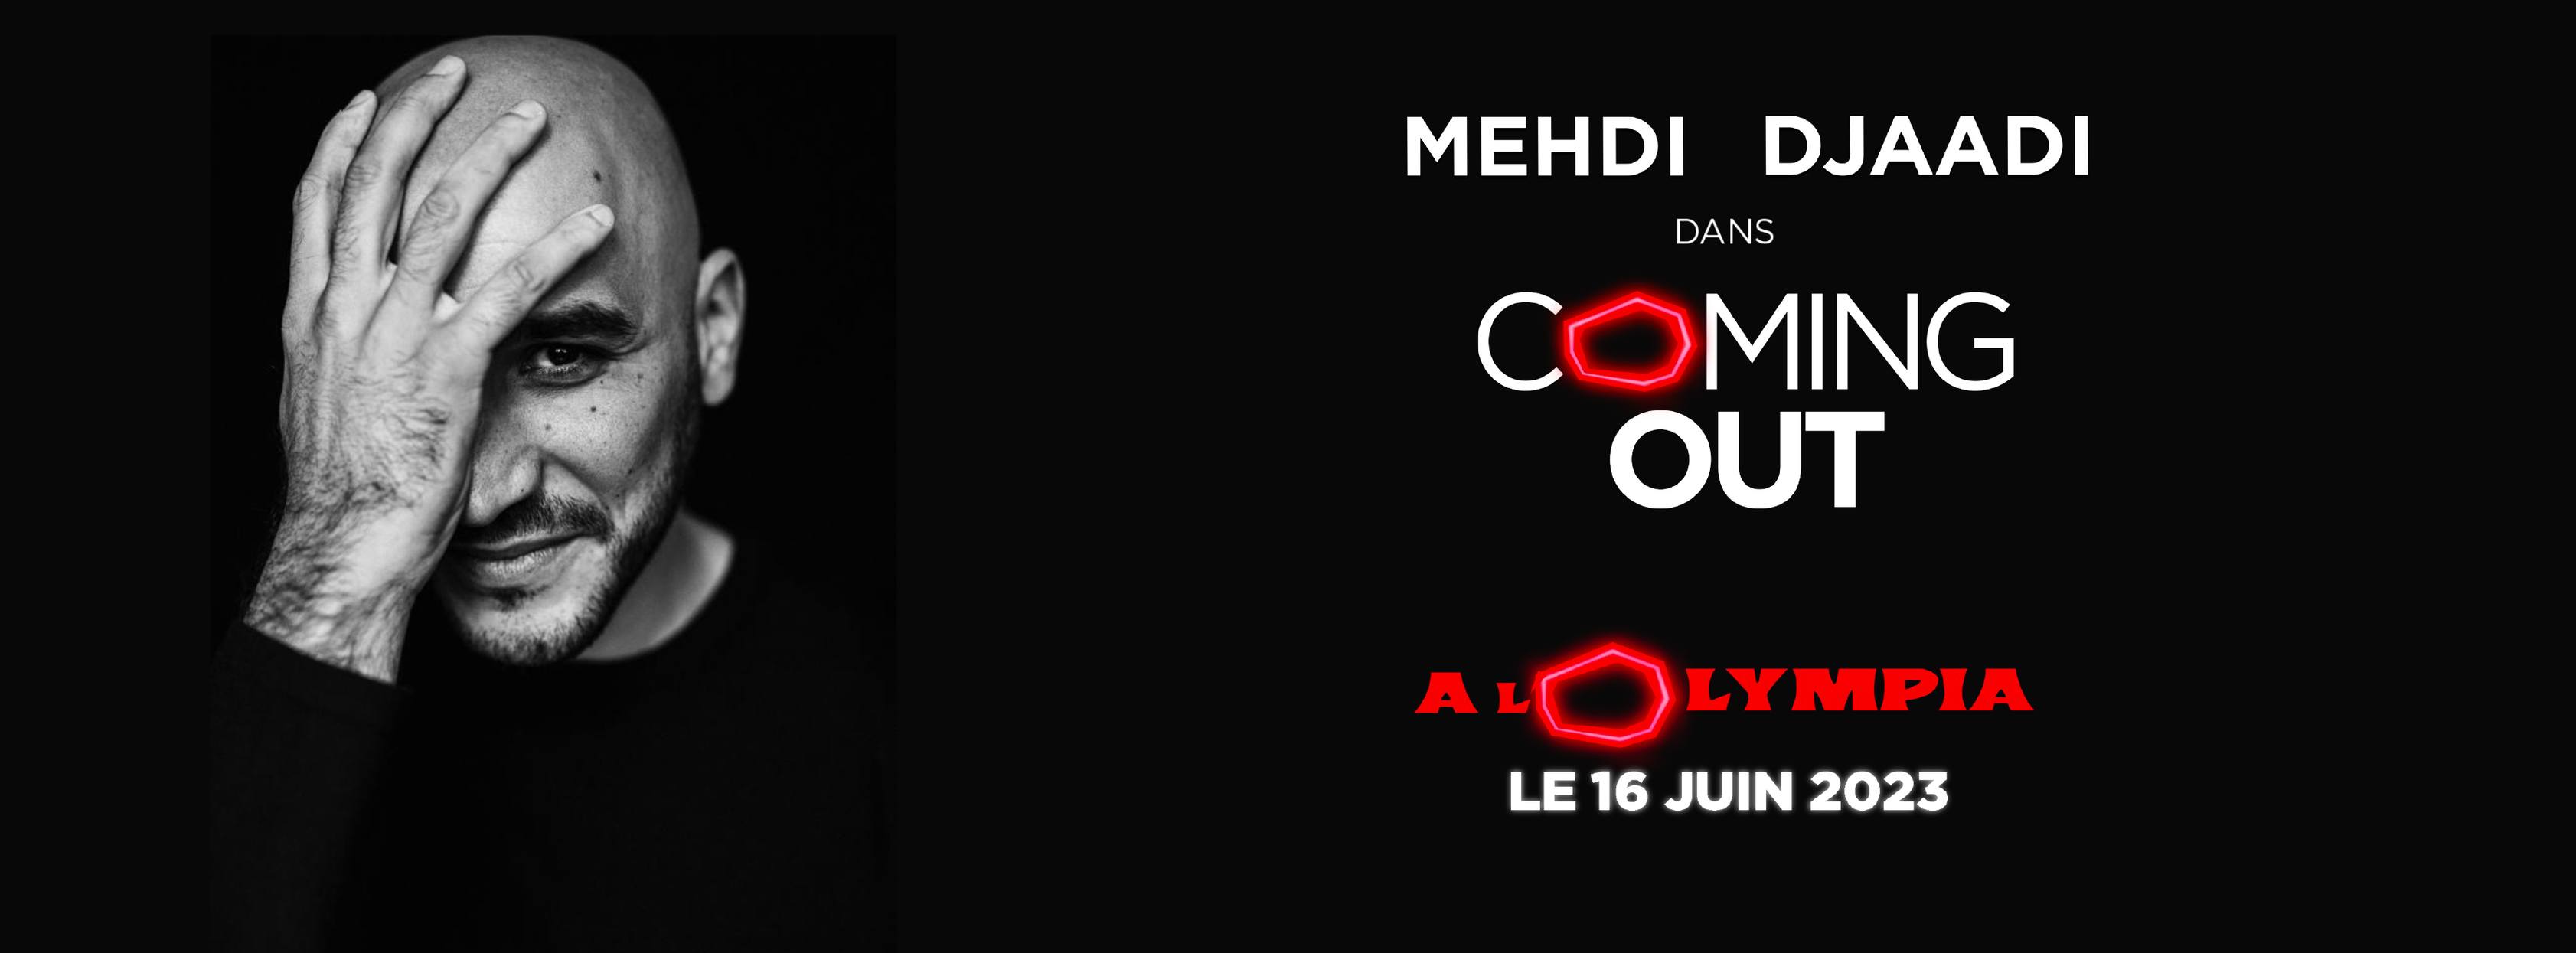 Coming-out-olympia-mehdi-djaadi